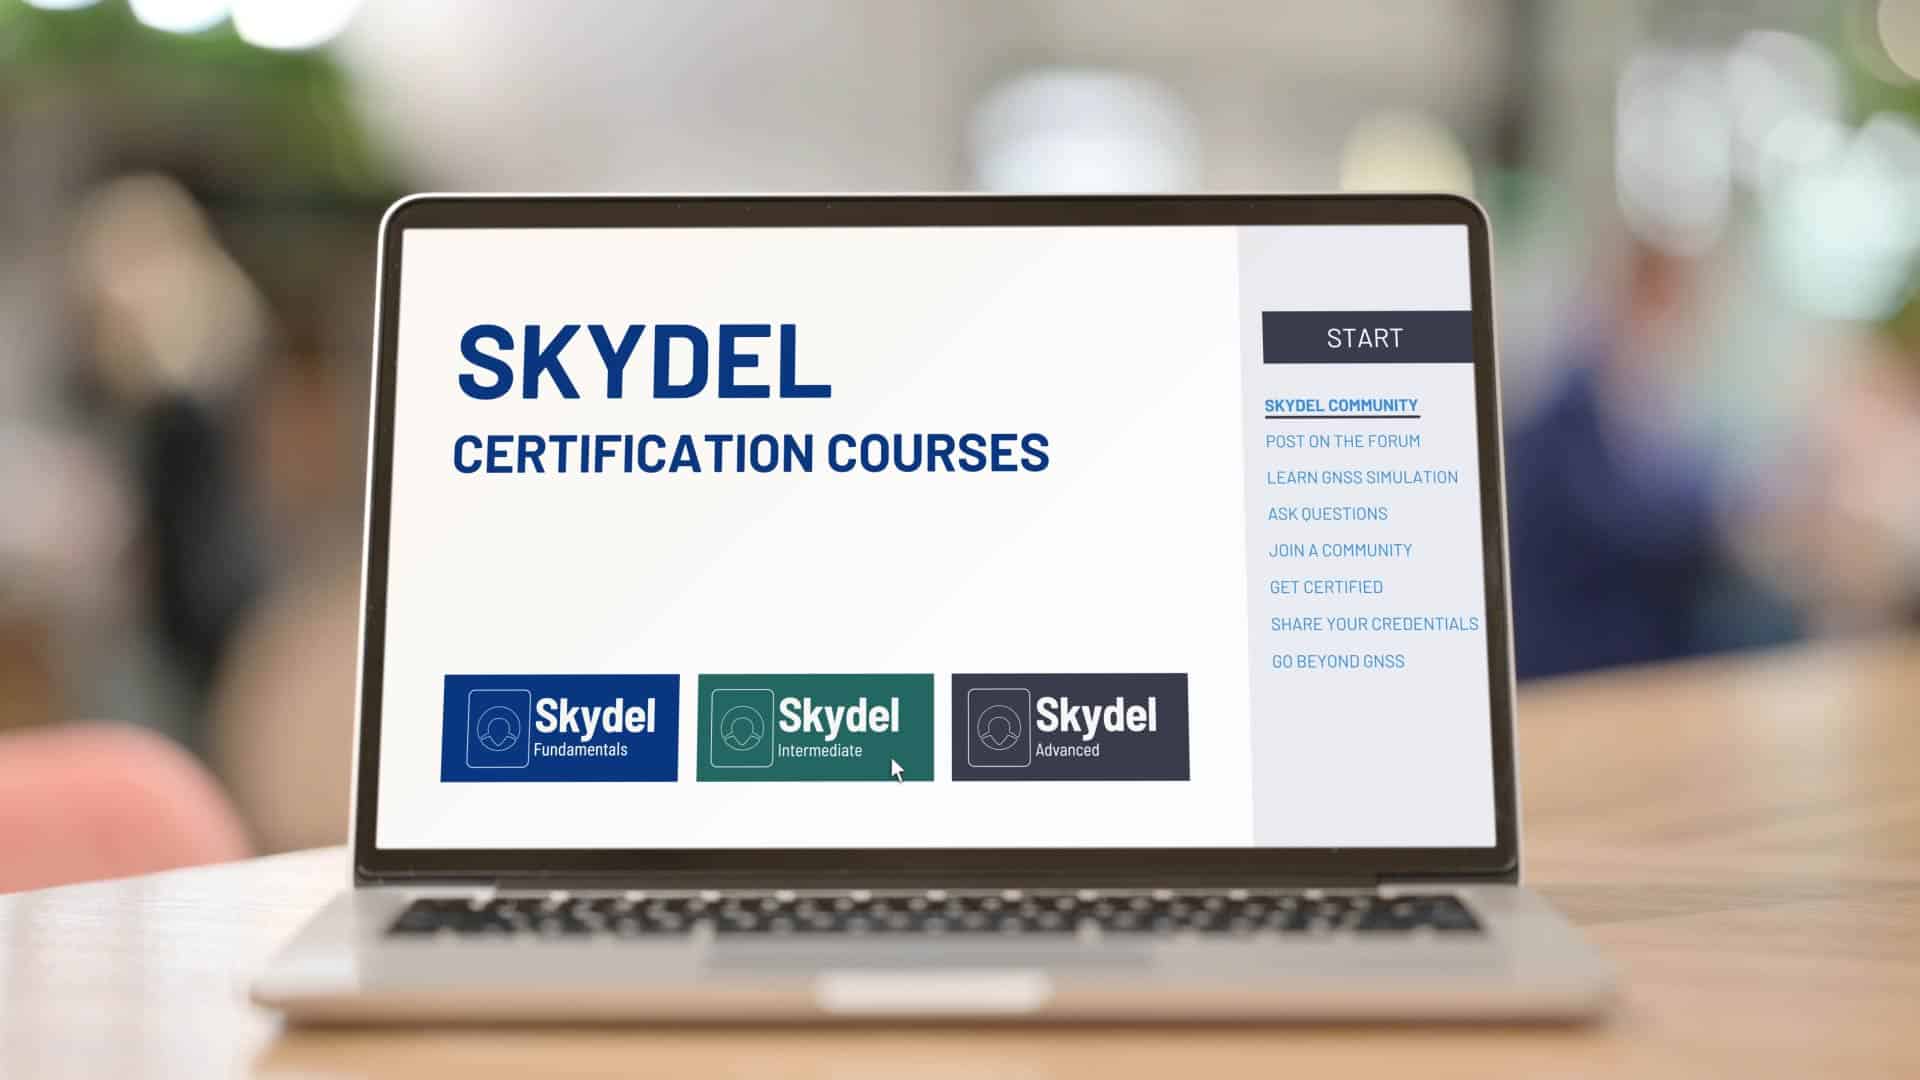 Skydel Certification Courses Trailer